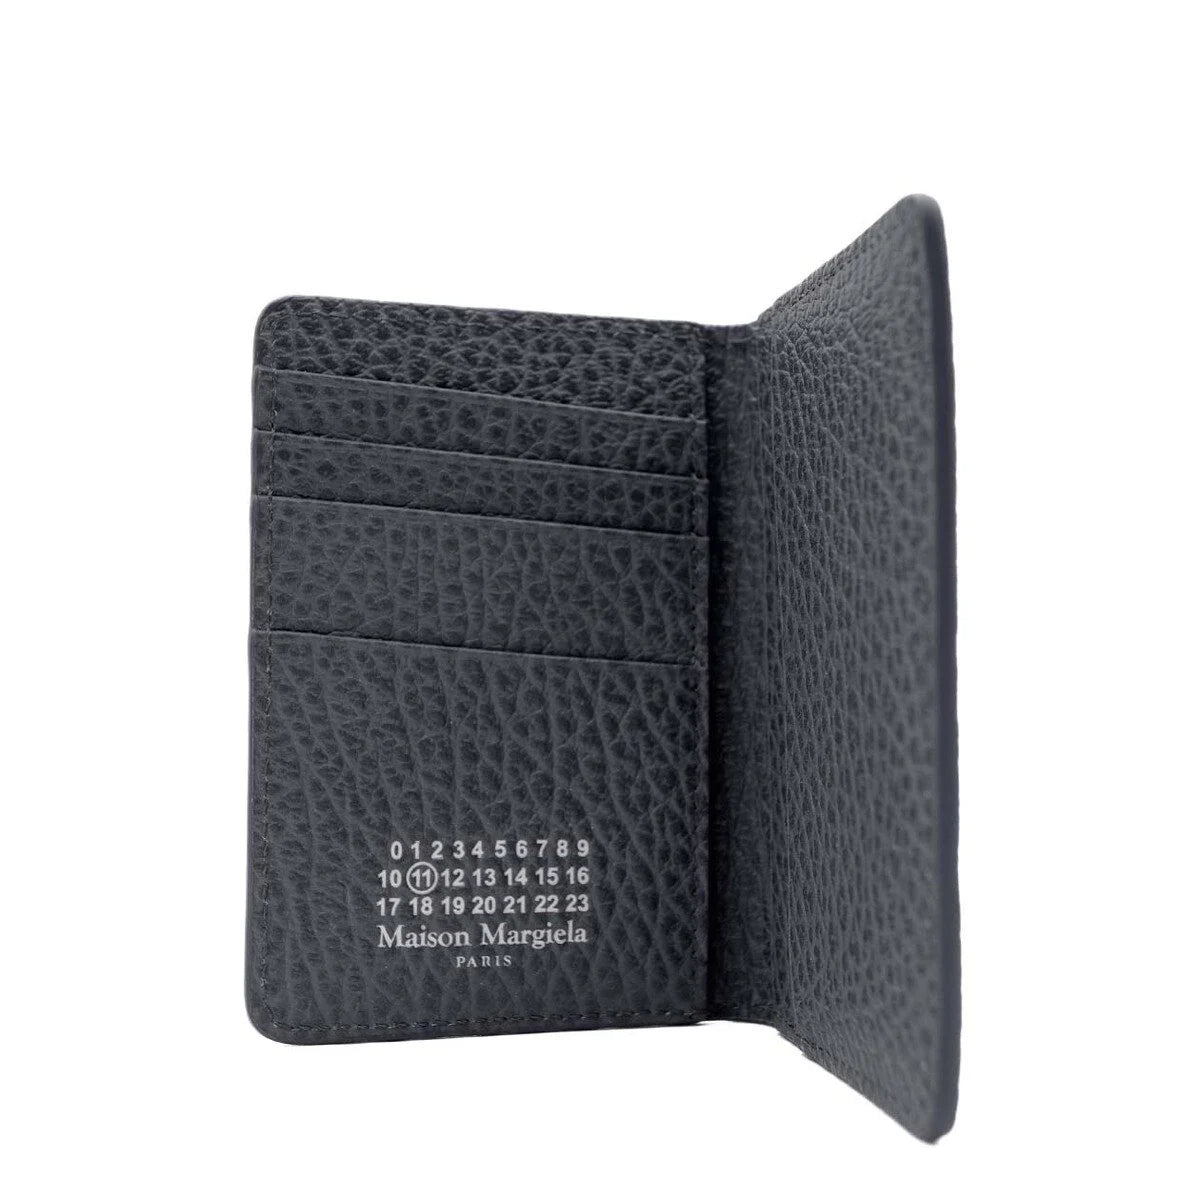 Maison Margiela Textured Leather Card Wallet